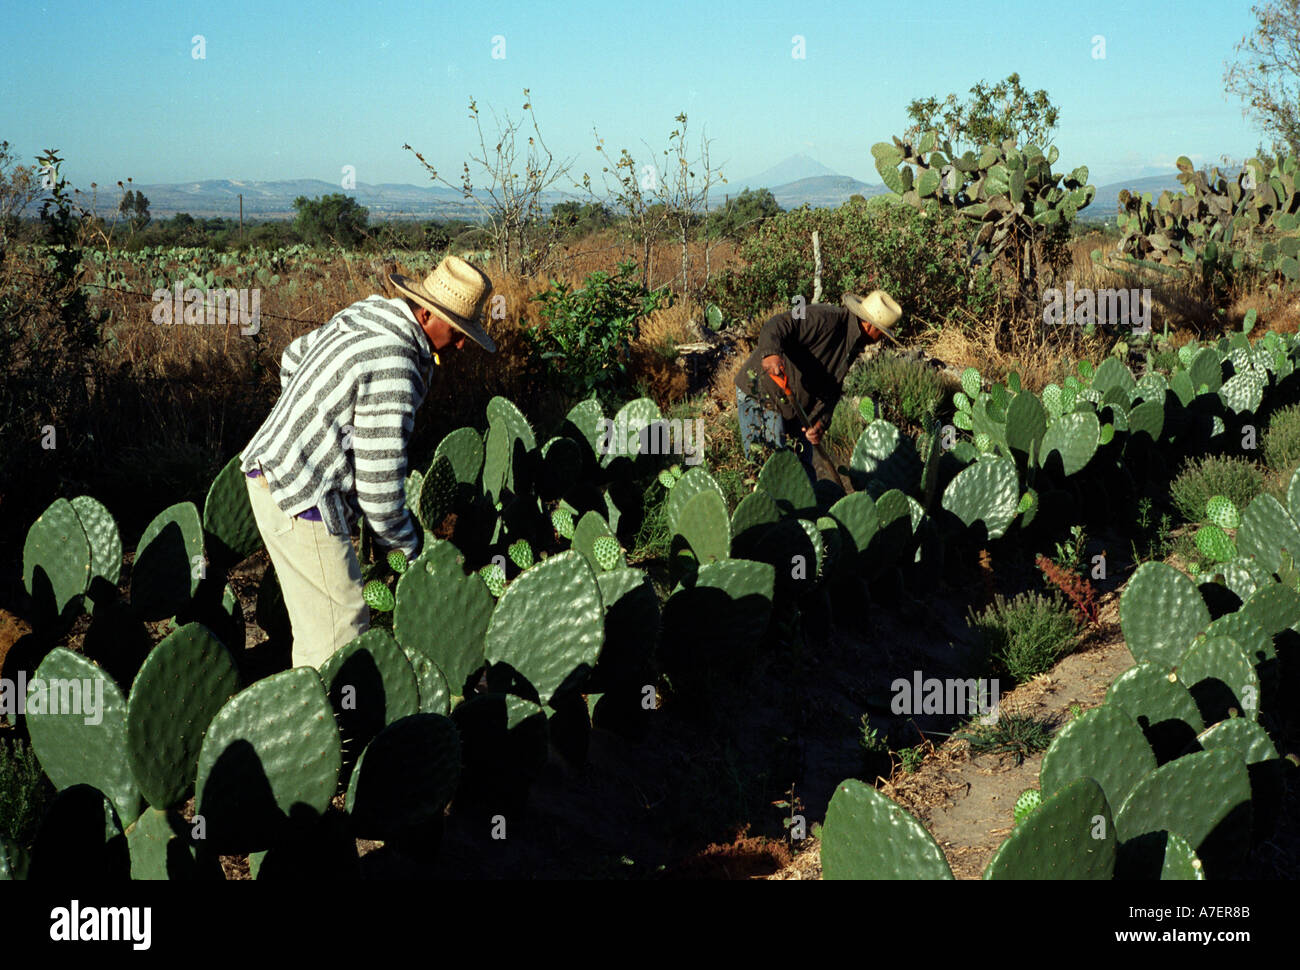 Mexiko, Puebla, San Sebastian Villanueva. Arbeiter auf einem Familienbauernhof Reinigung Felder des Nopal. Stockfoto